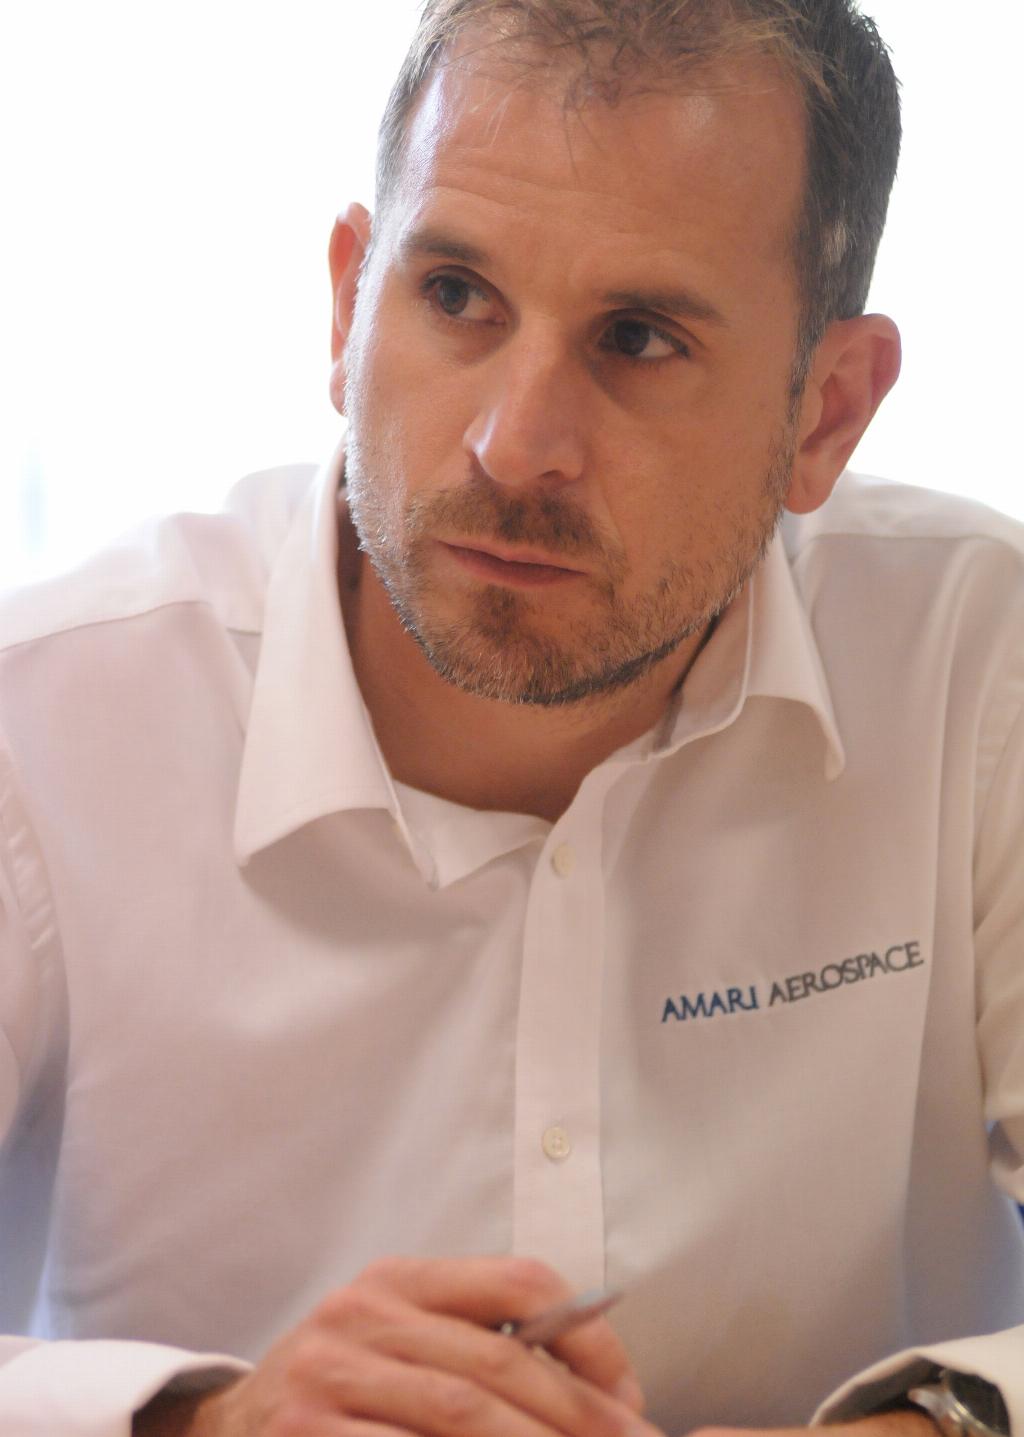 David Enright, general manager of Amari Aerospace